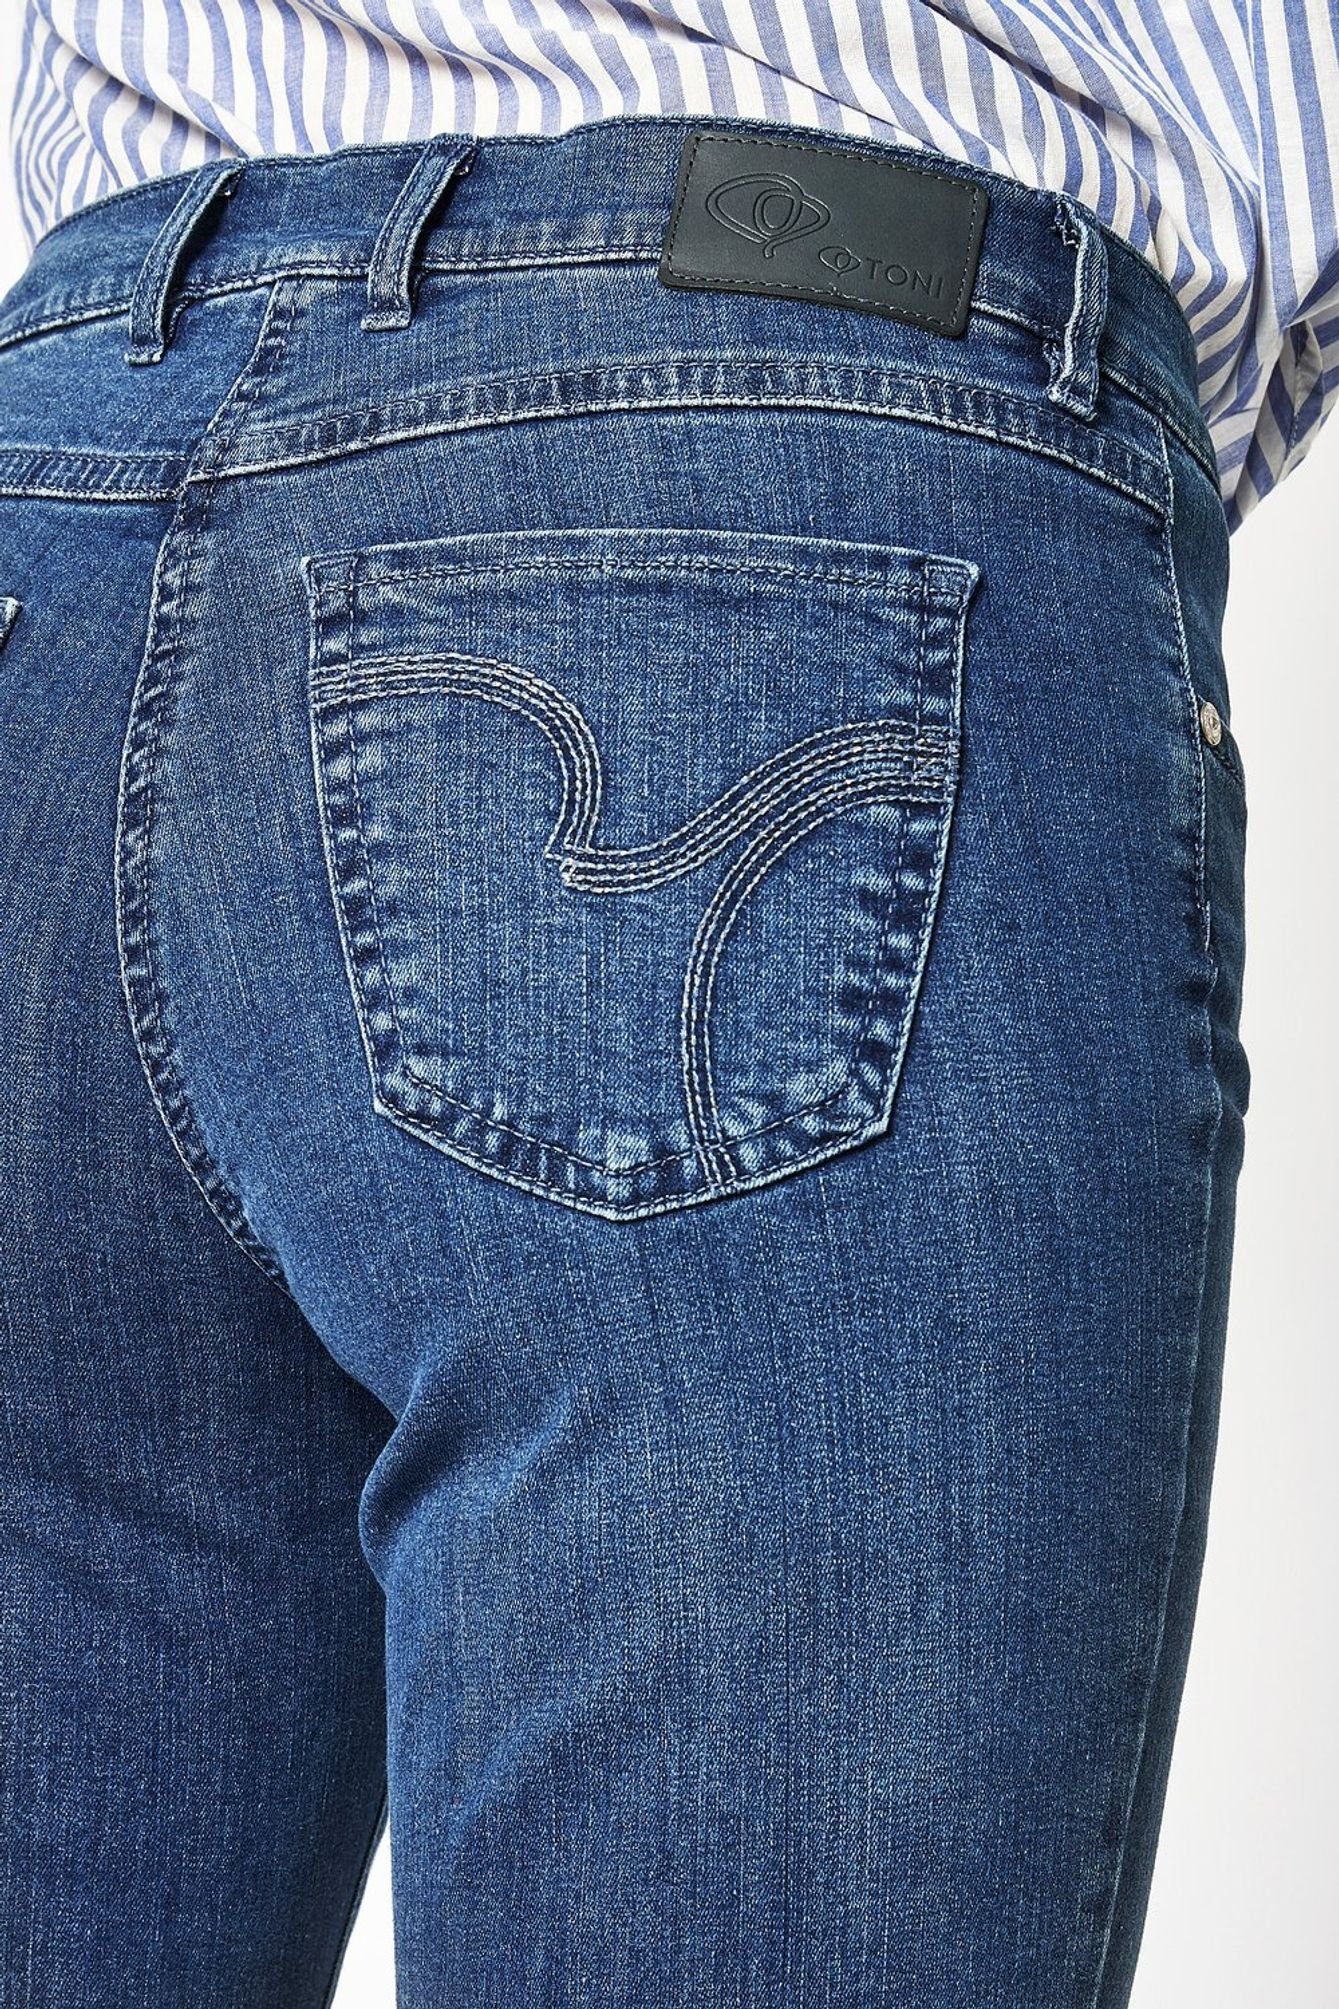 TONI 5-Pocket-Jeans 12-04 blue 1106 5-Pocket-Design mid (502) used